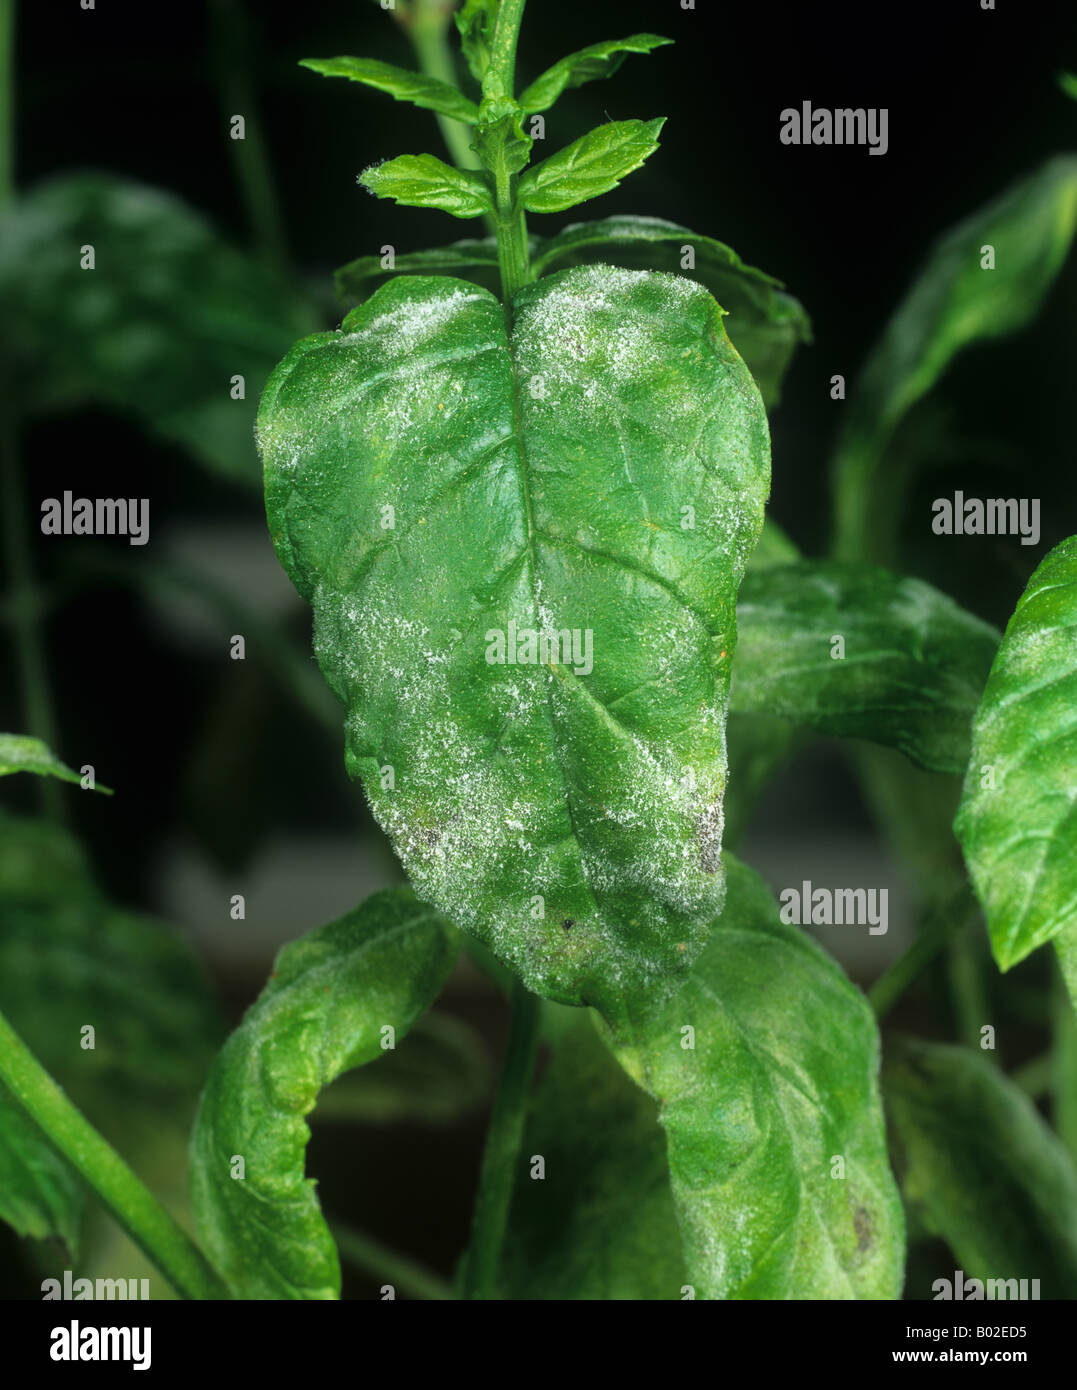 Powdery mildew Erysiphe orontii infection on mint leaves Stock Photo